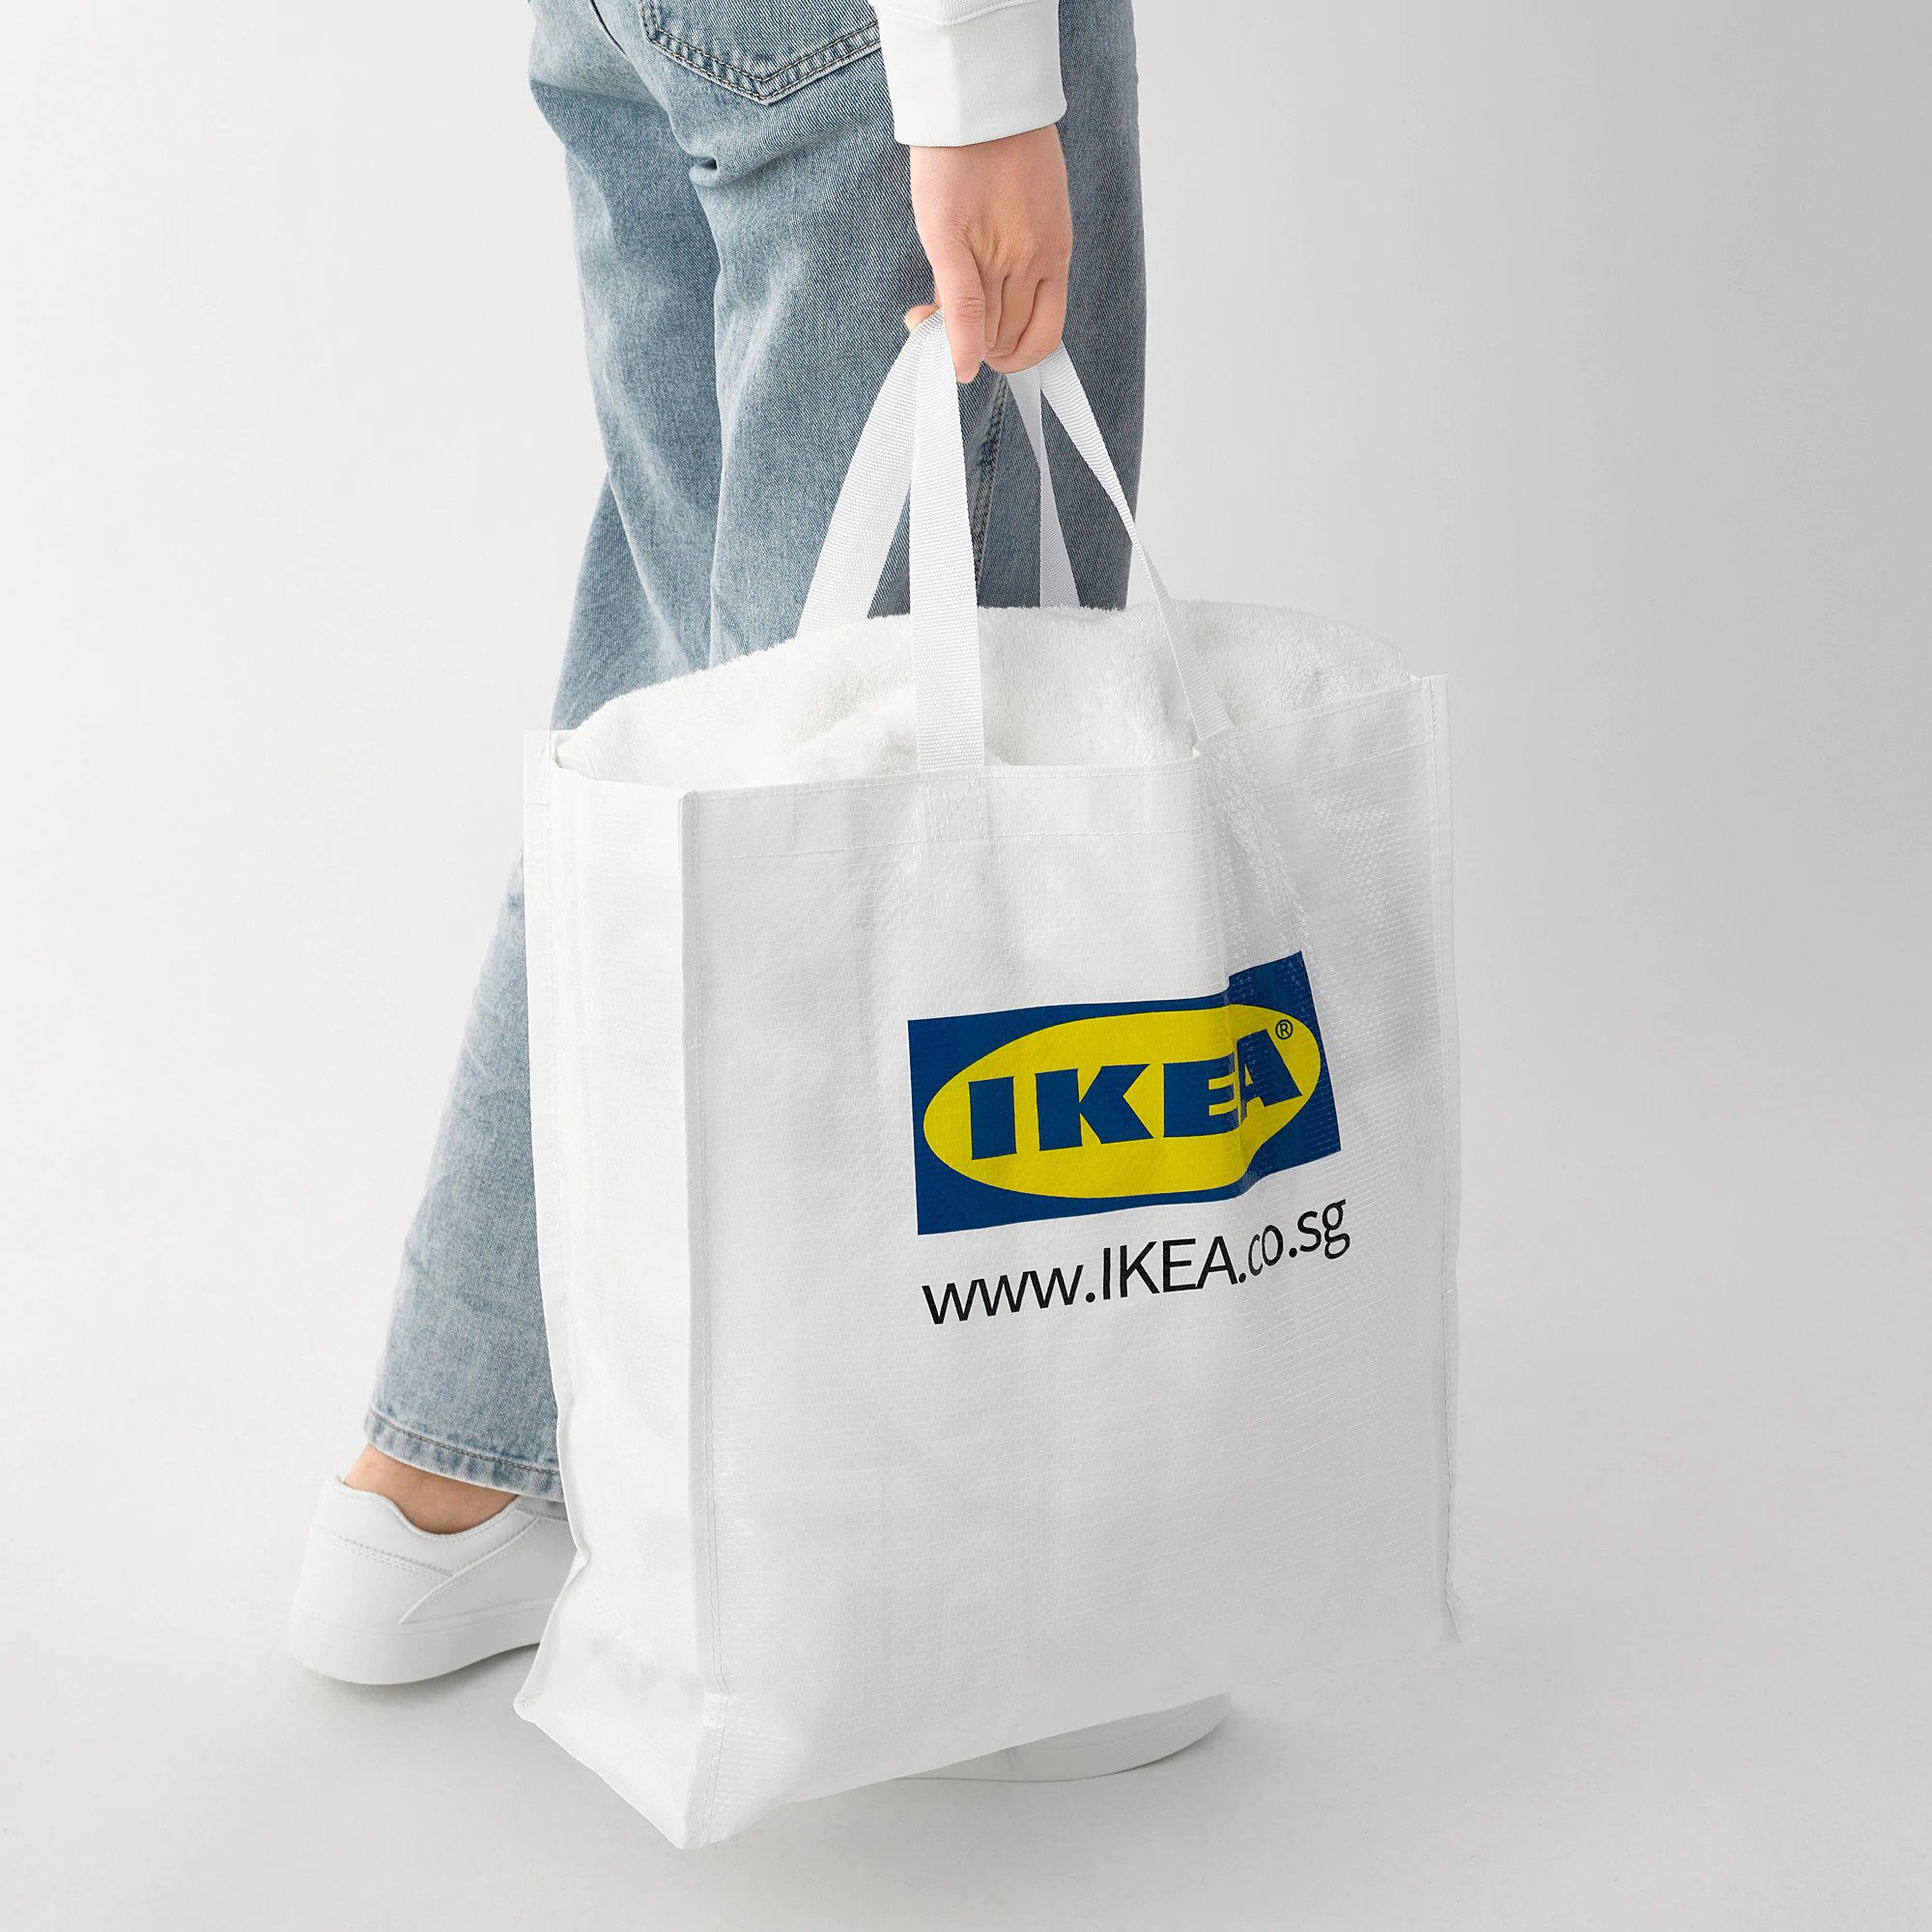 Ikea Cloth Bag Wrong URL 4 